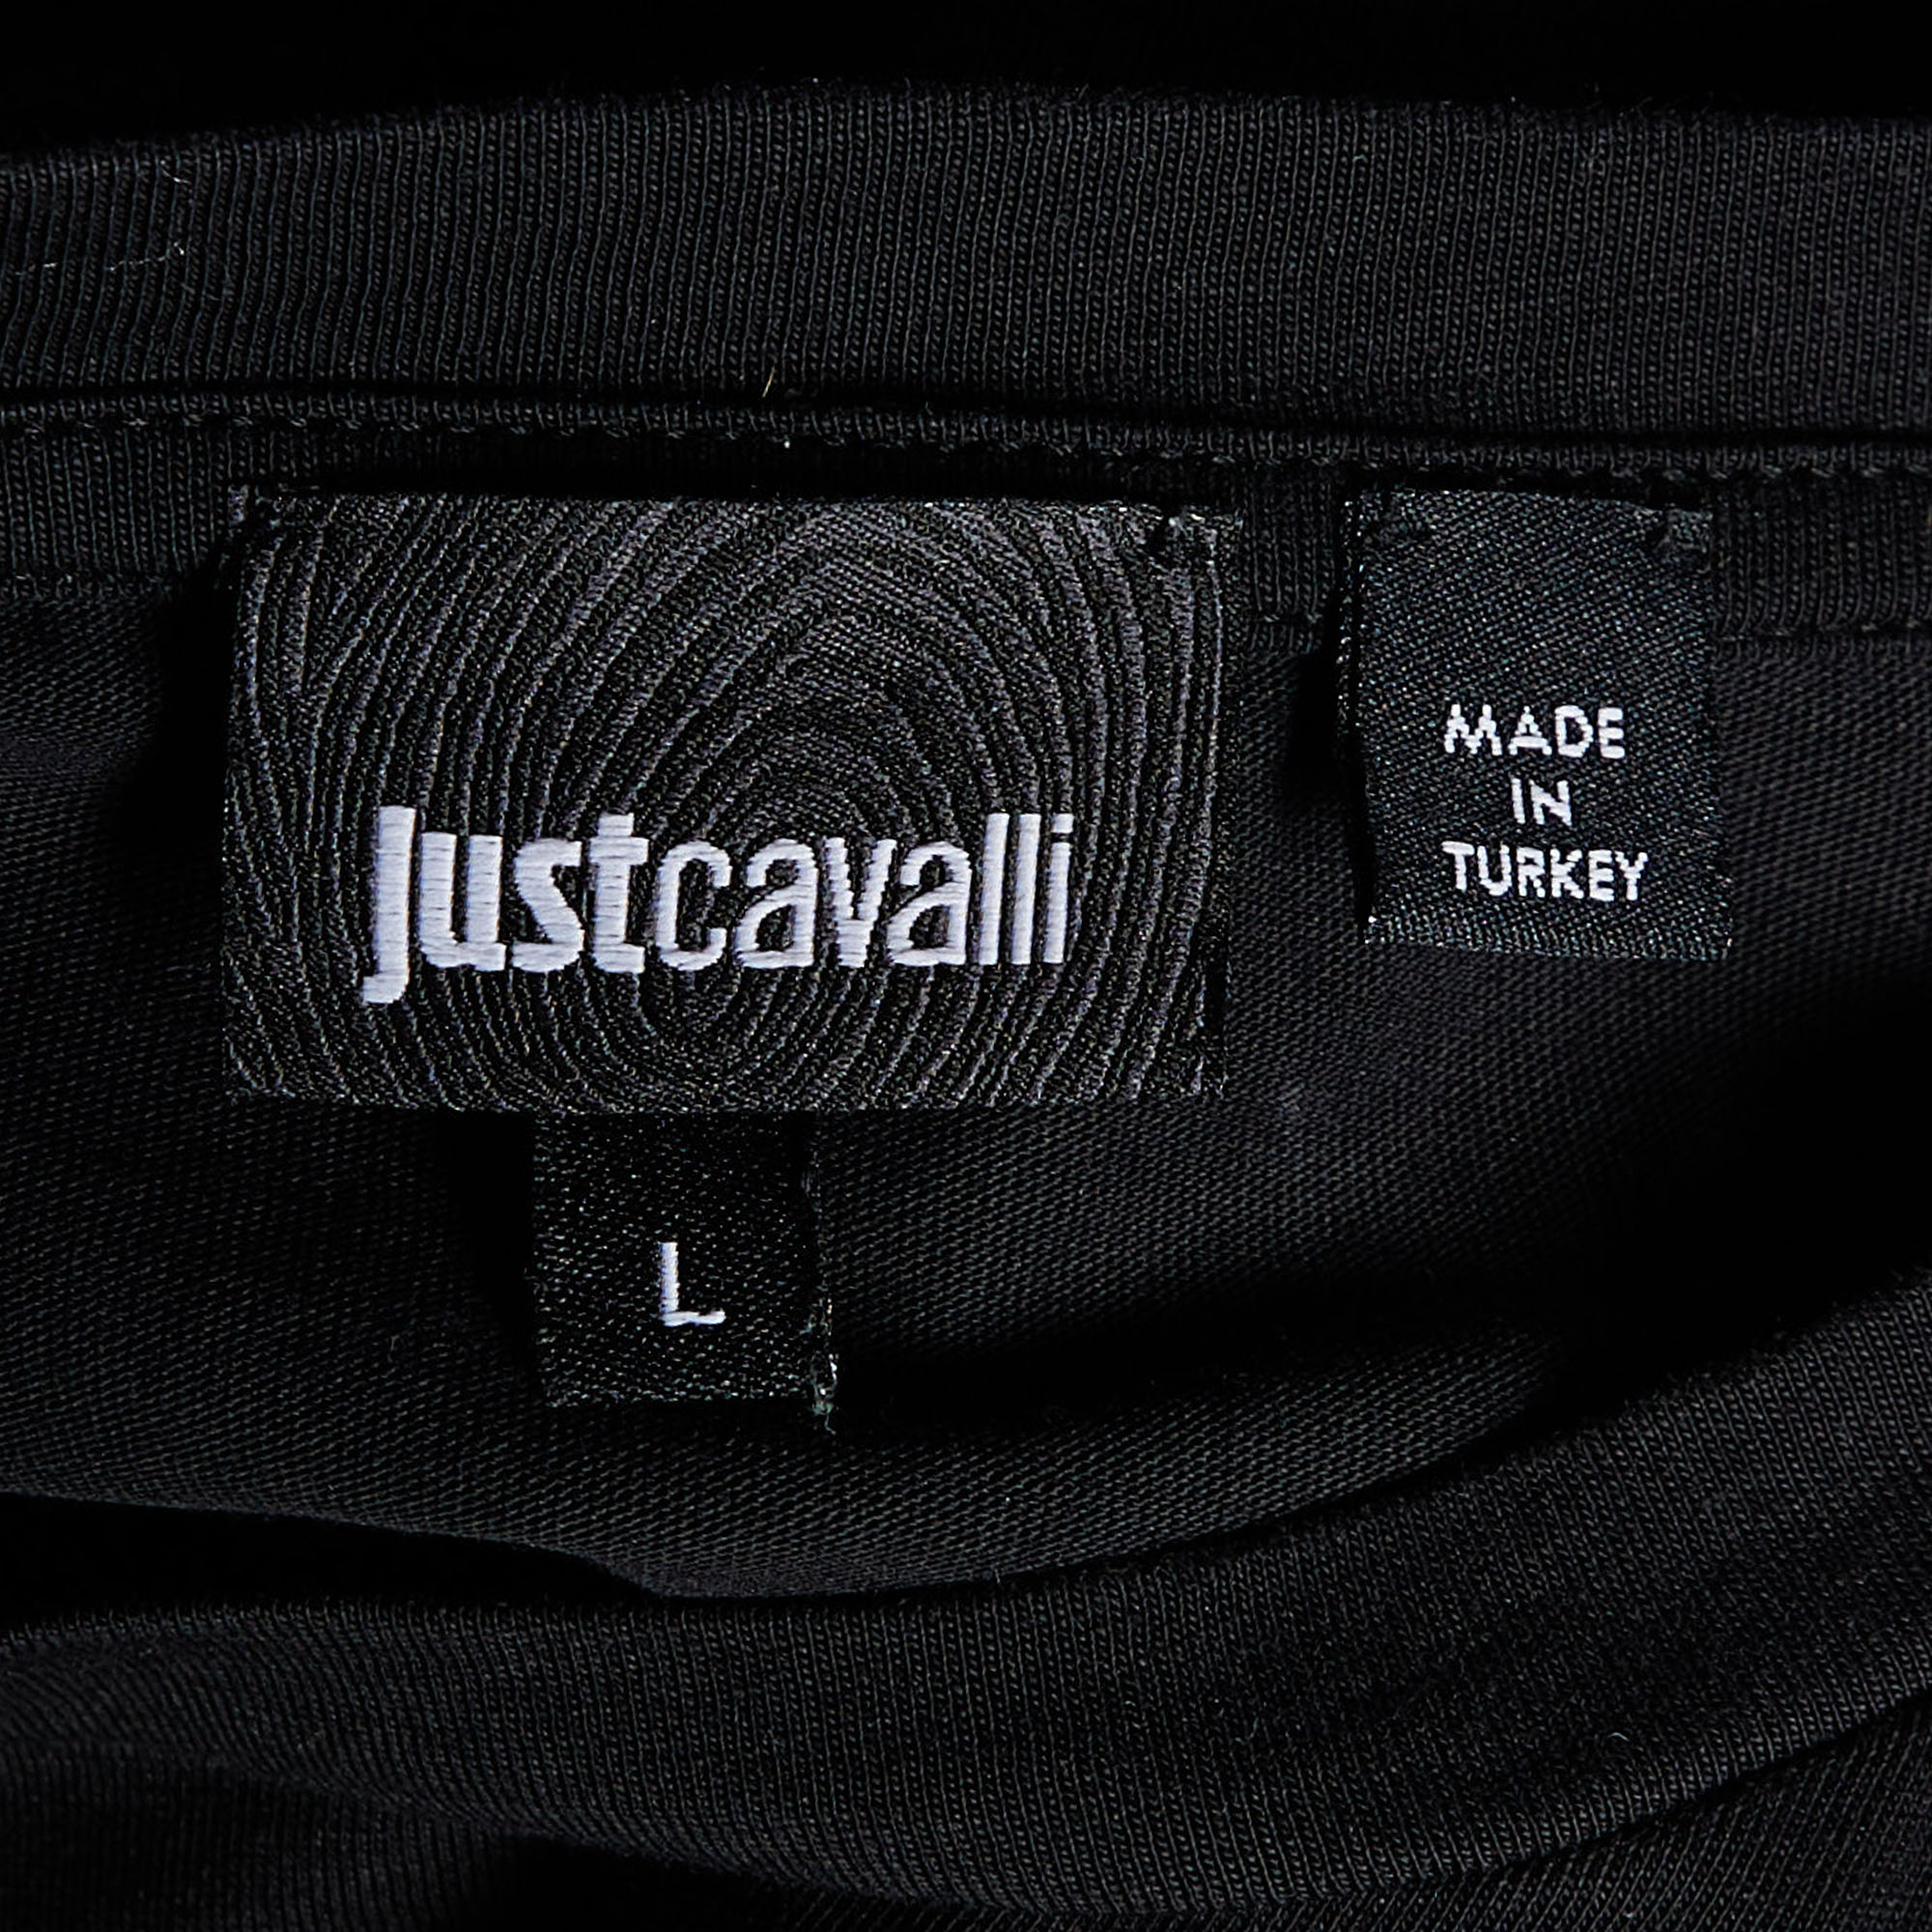 Just Cavalli Black Printed Cotton Knit Crewneck T-Shirt L